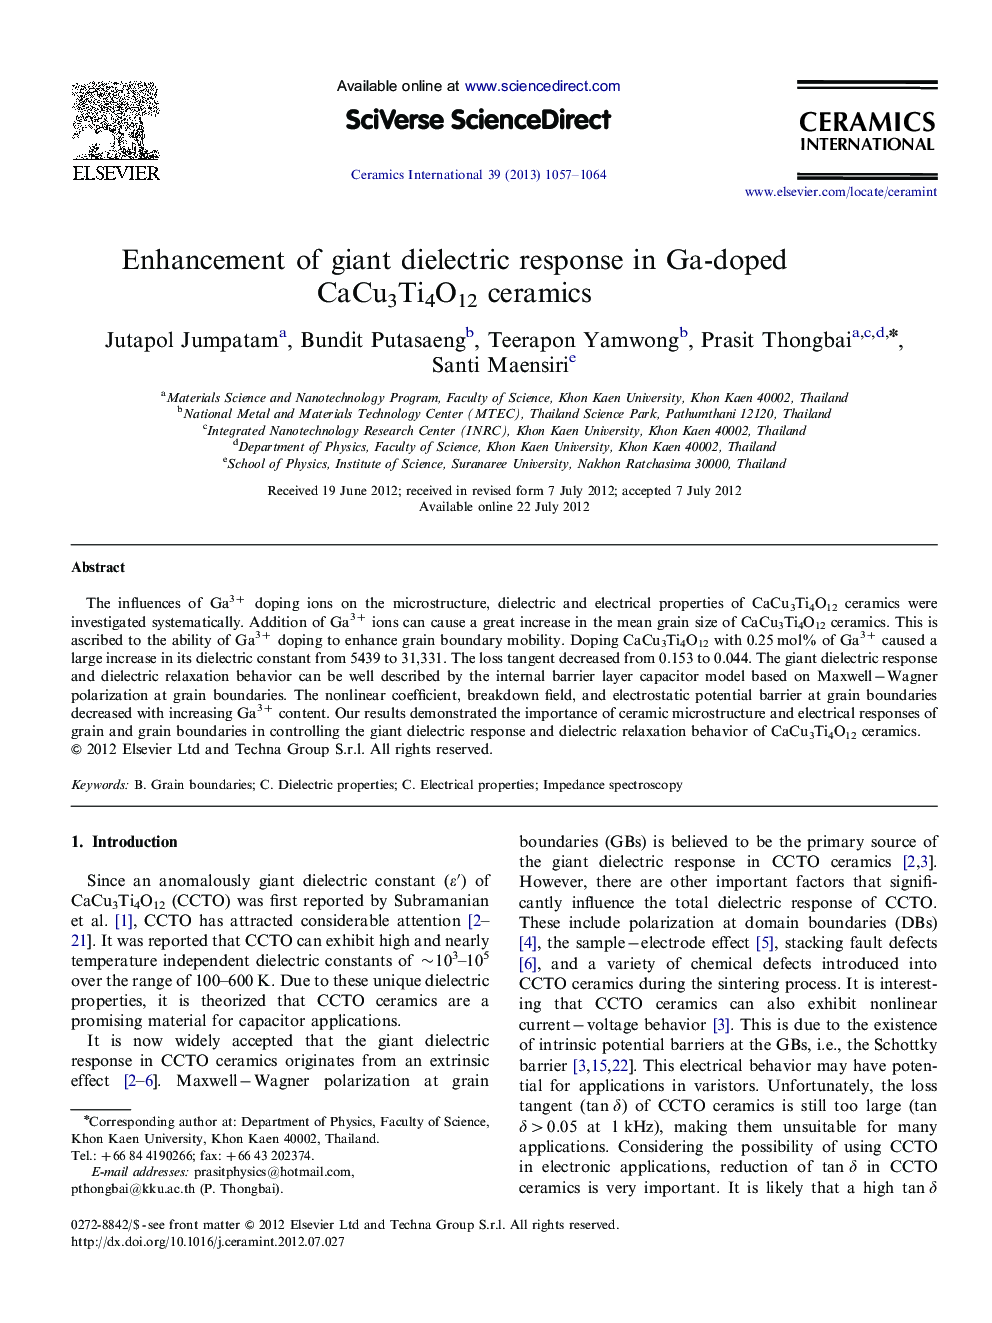 Enhancement of giant dielectric response in Ga-doped CaCu3Ti4O12 ceramics